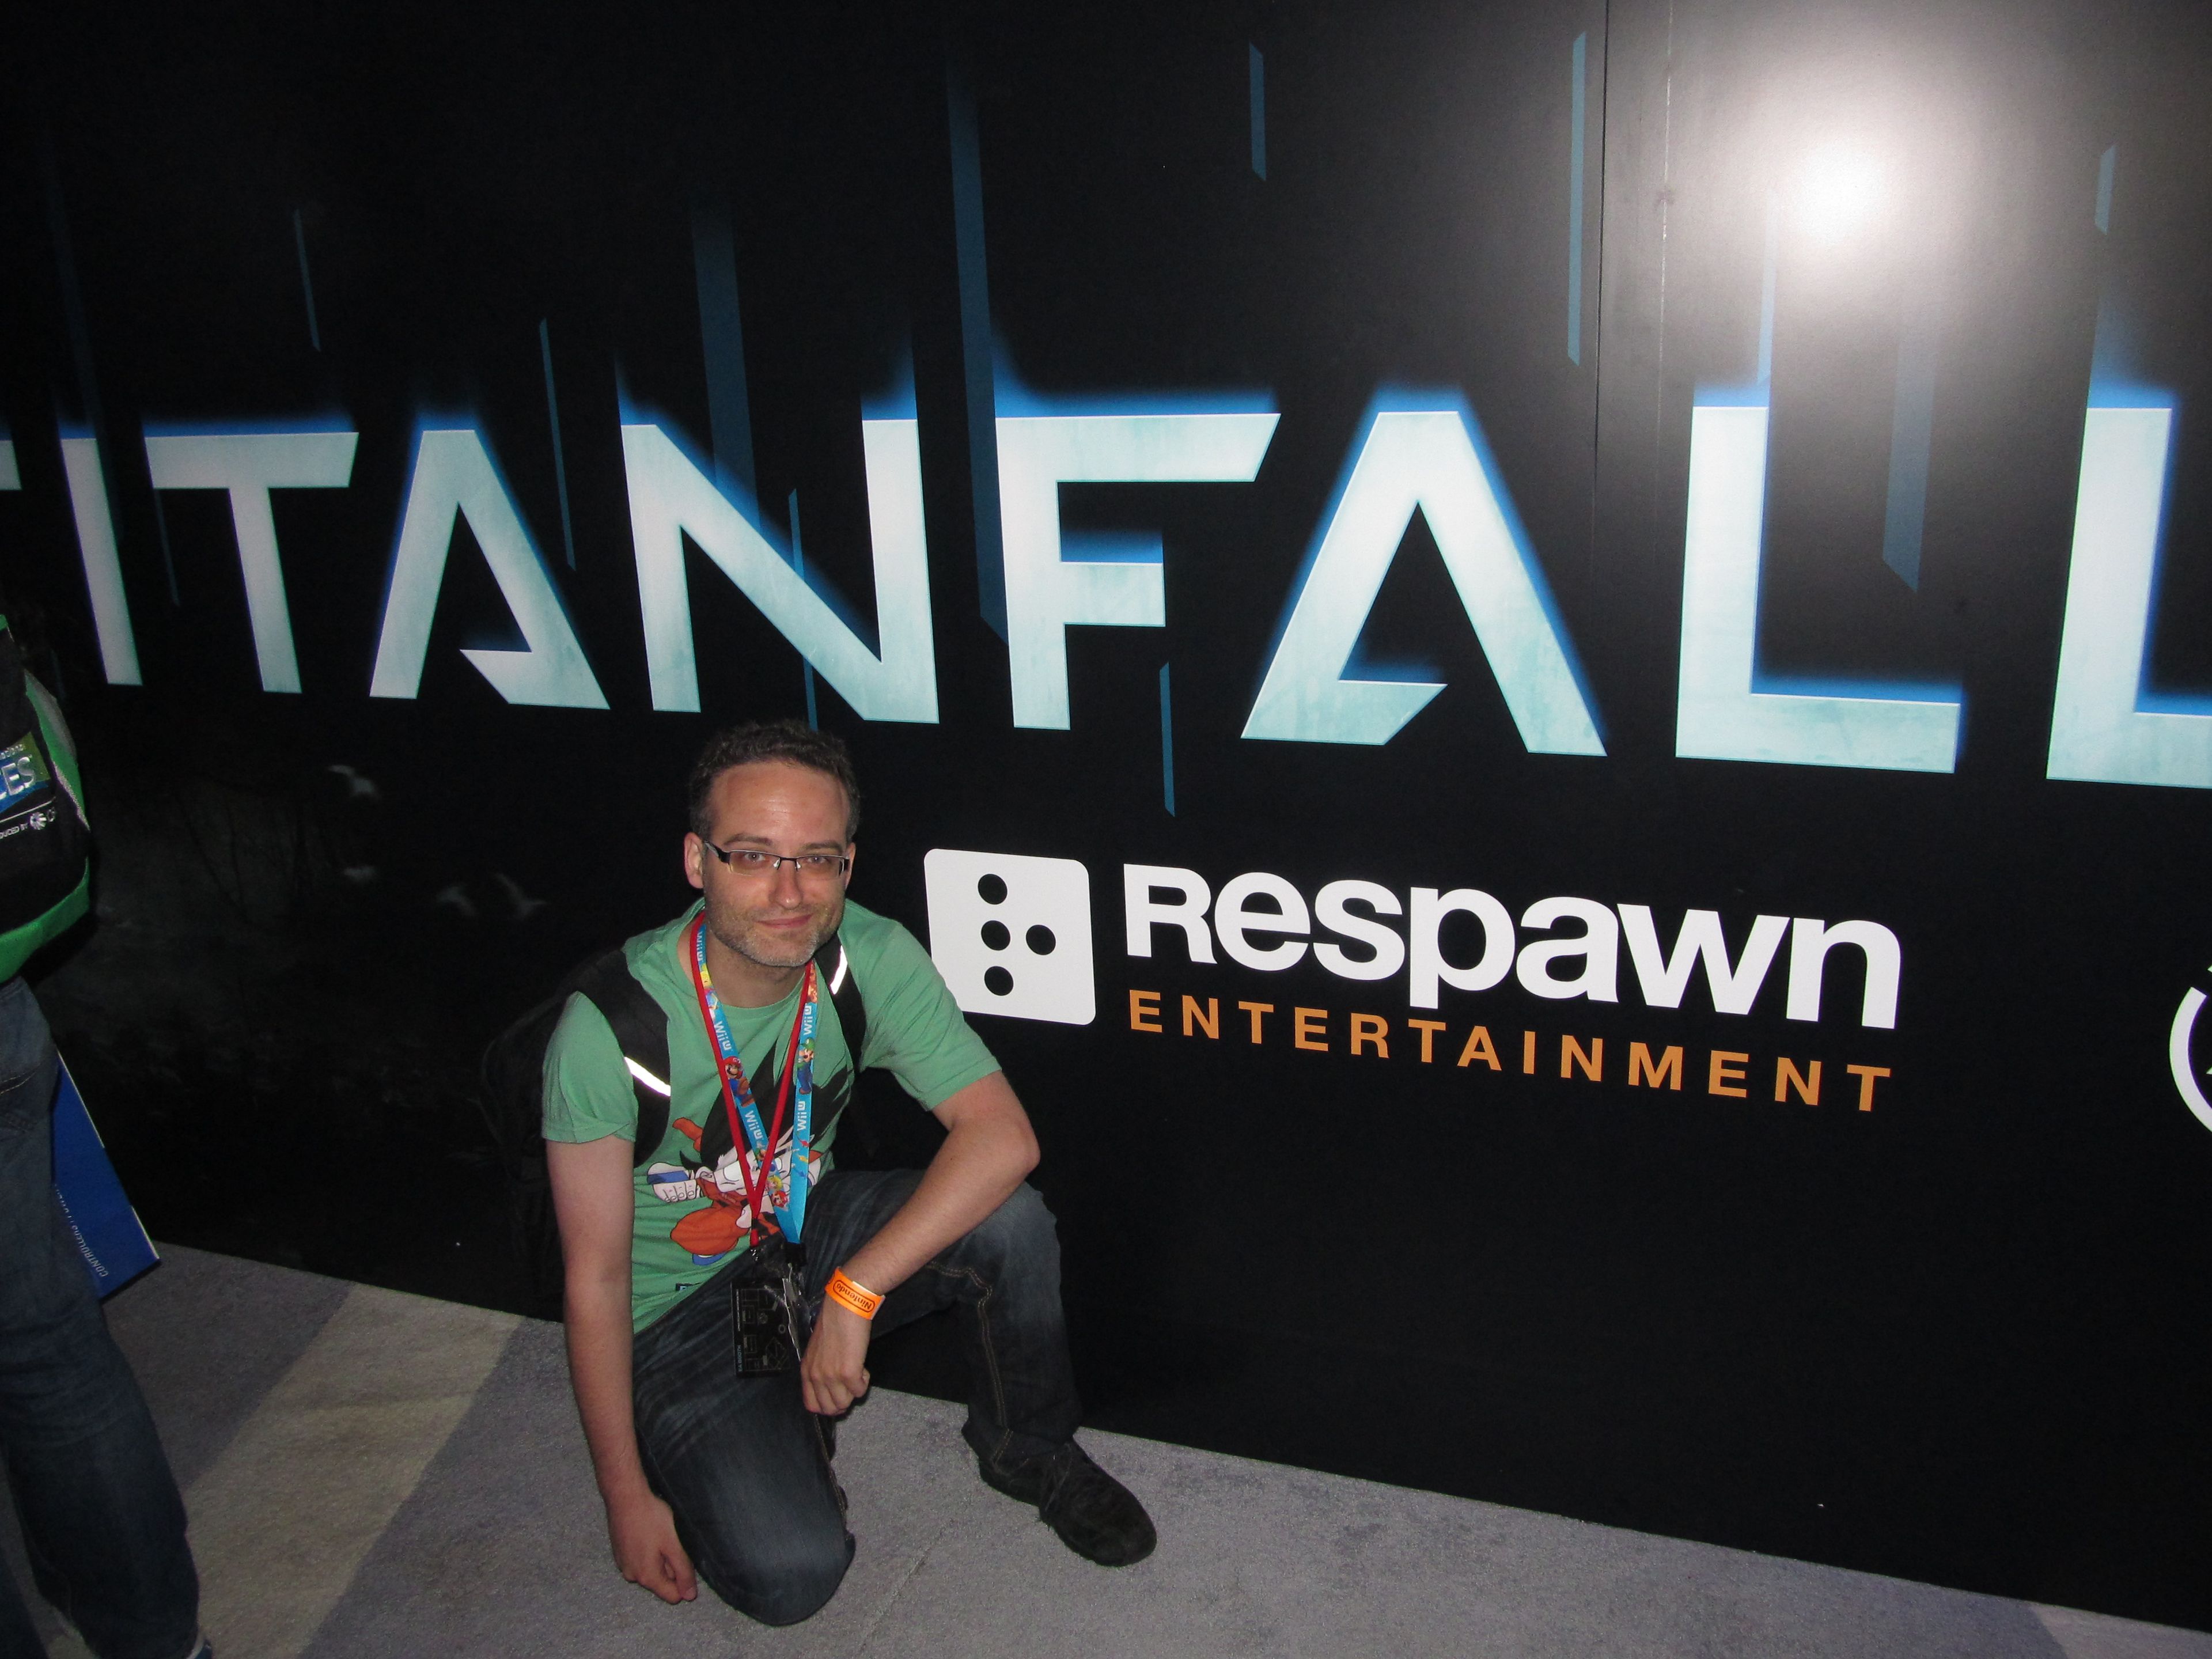 E3 2013: Impresiones de Titanfall